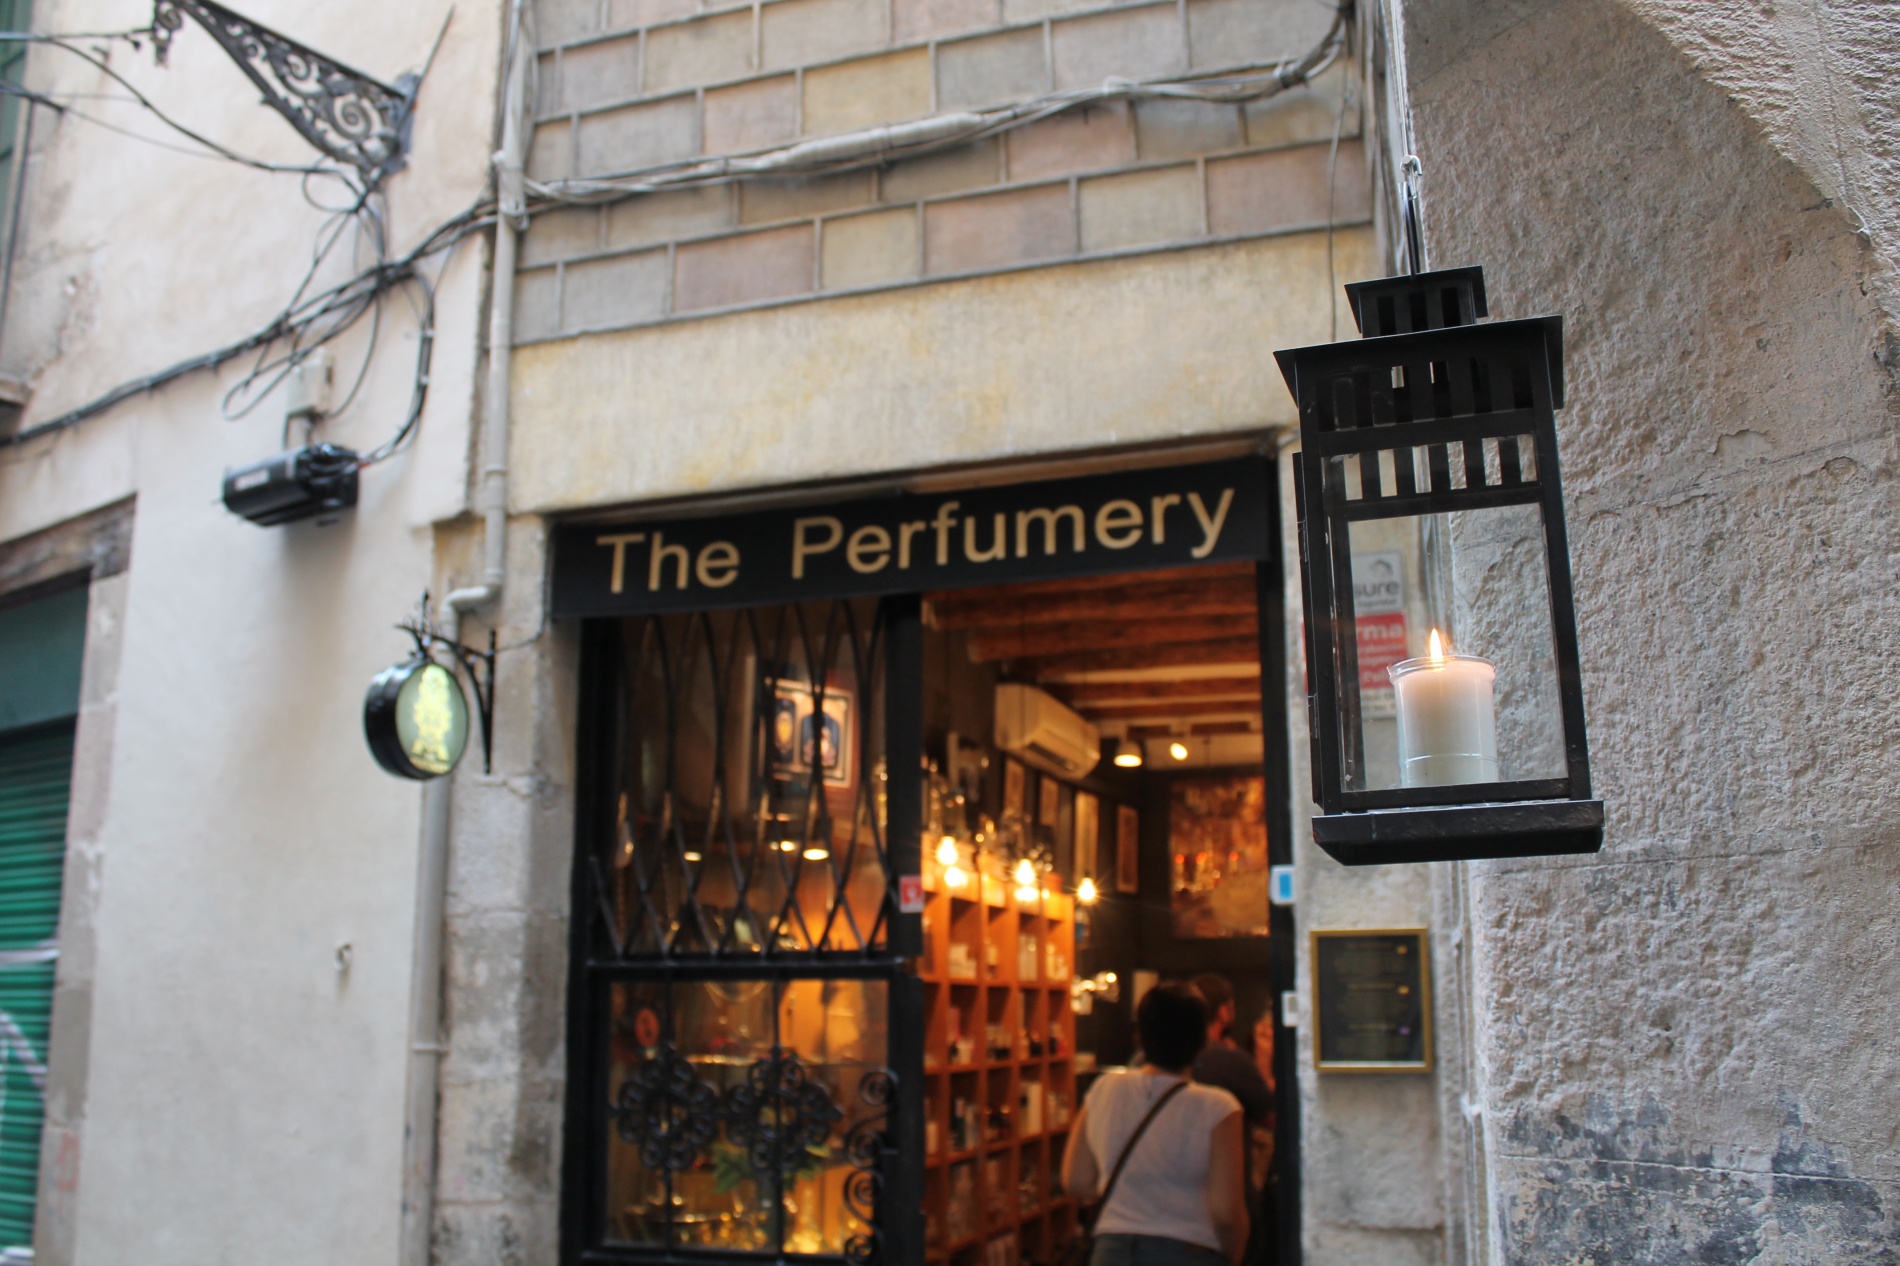 The Perfumery